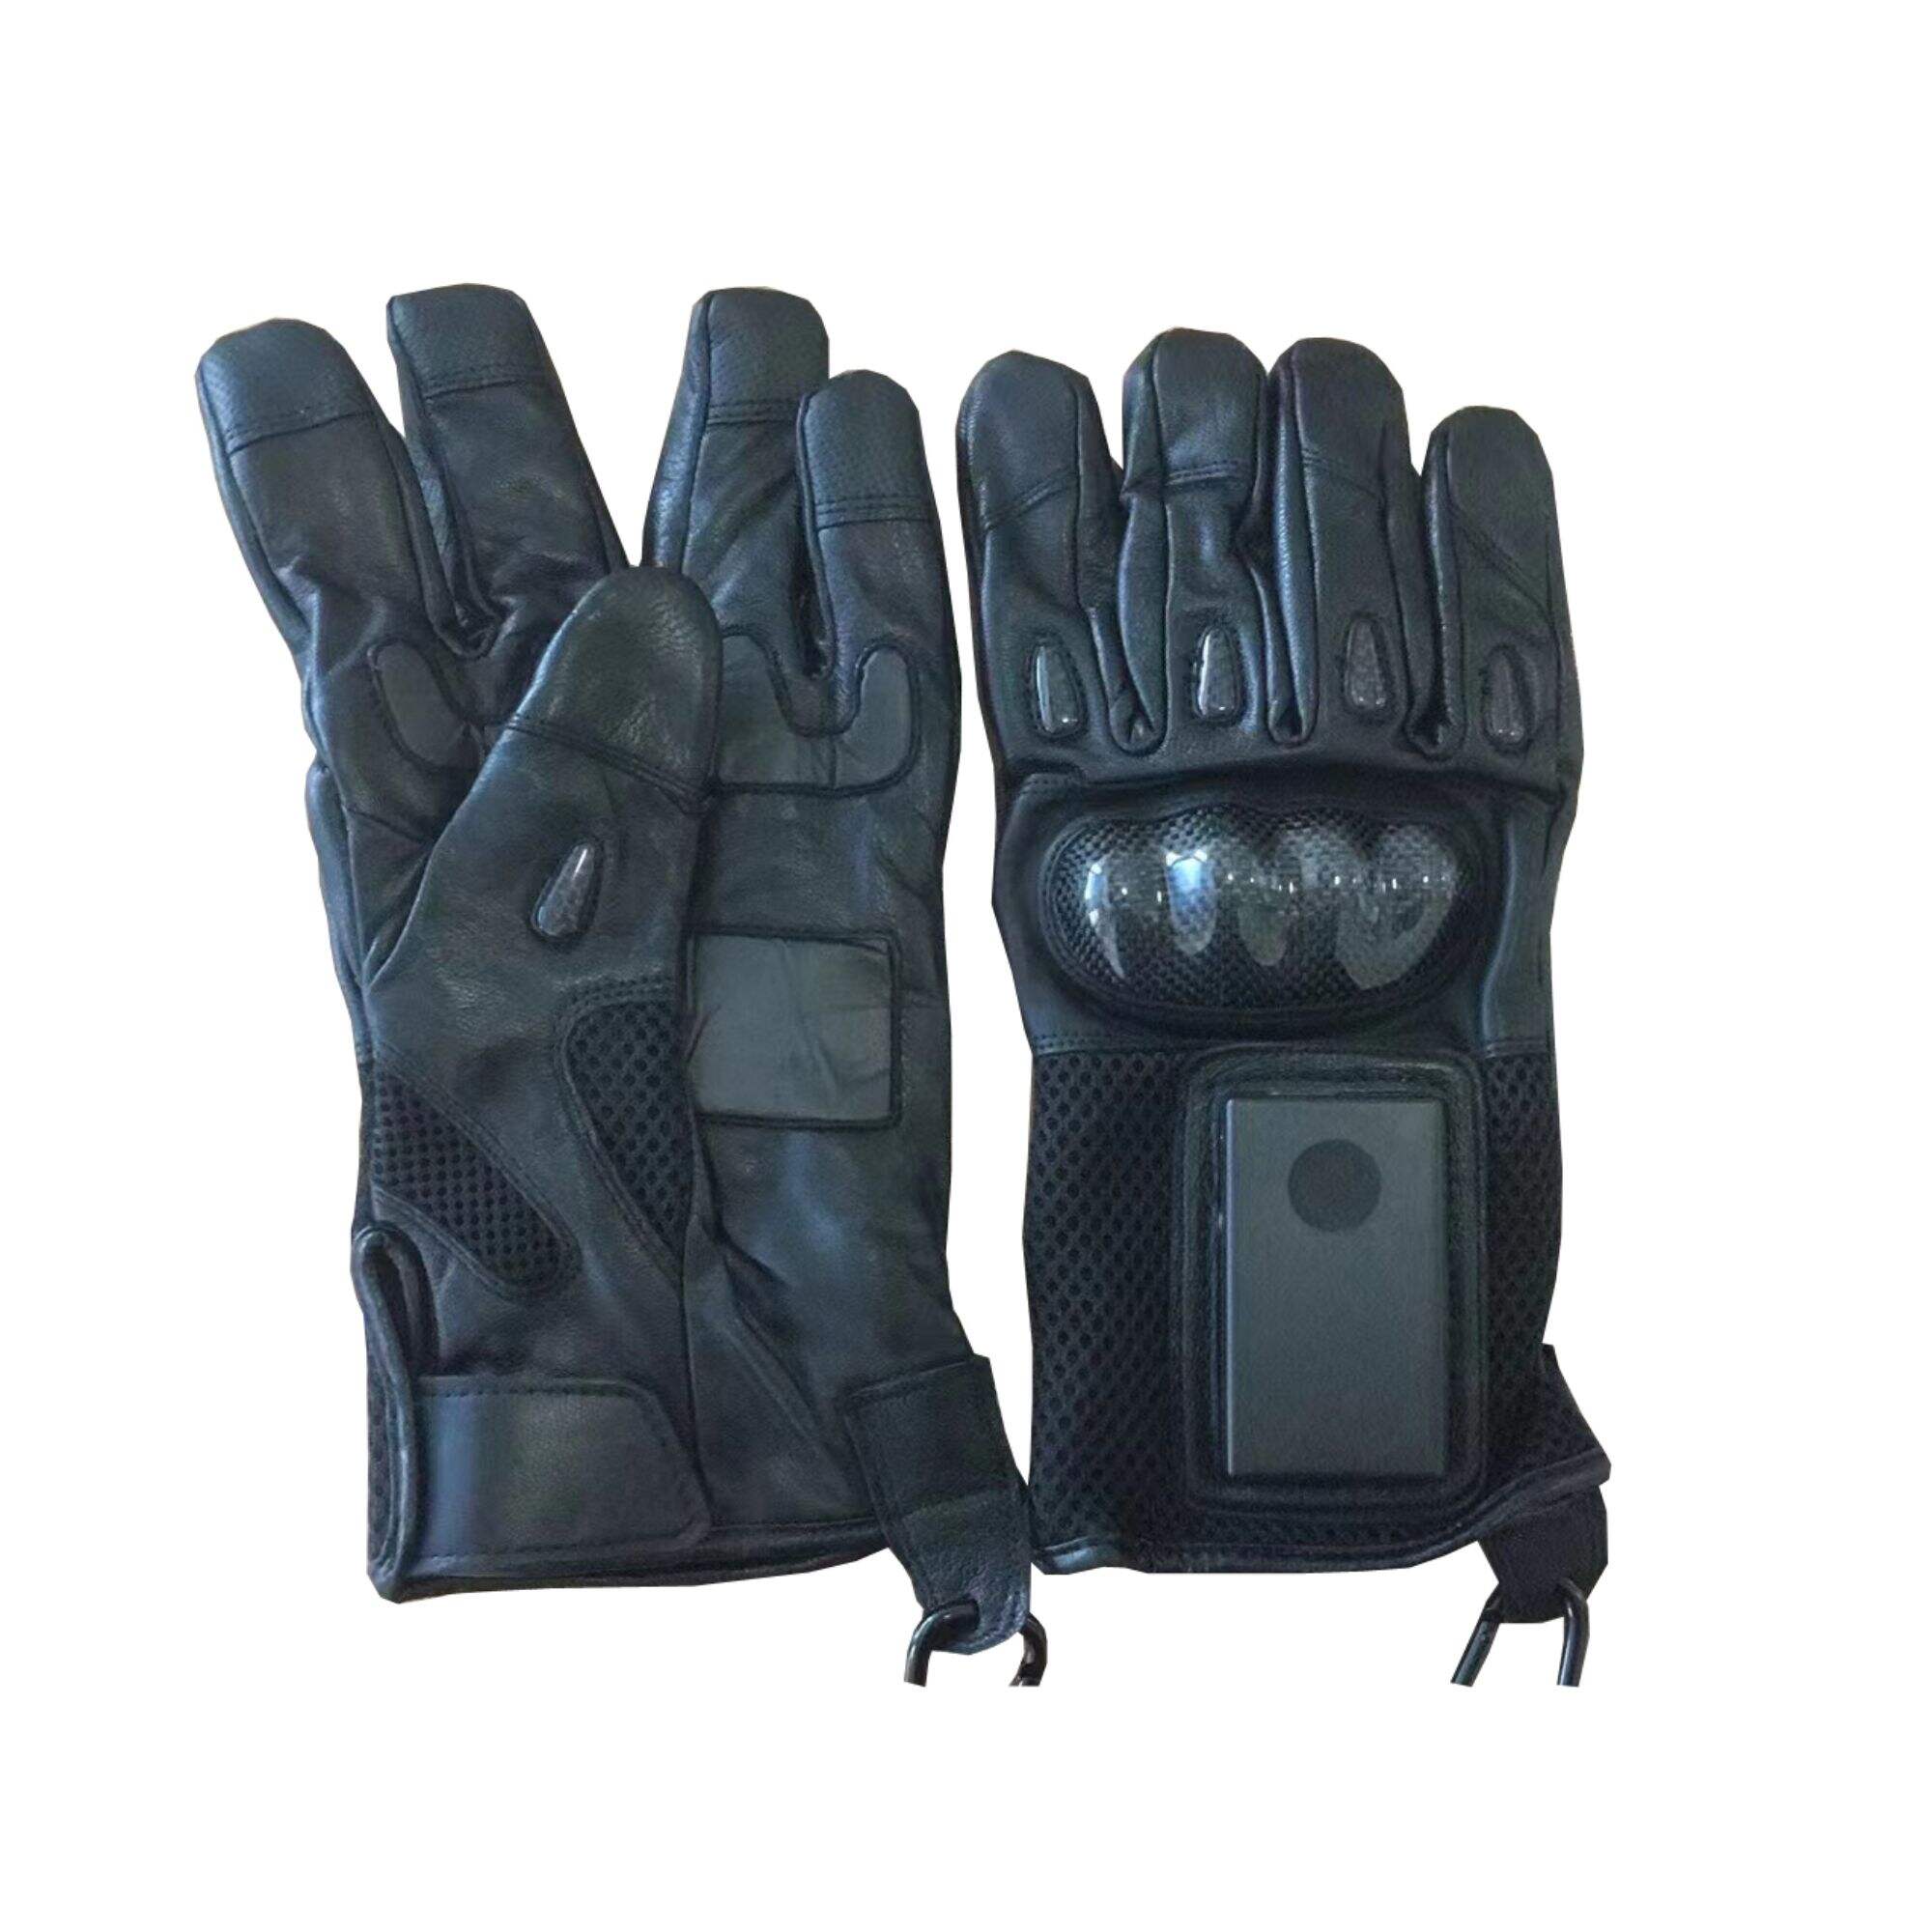 Electric shock capture gloves